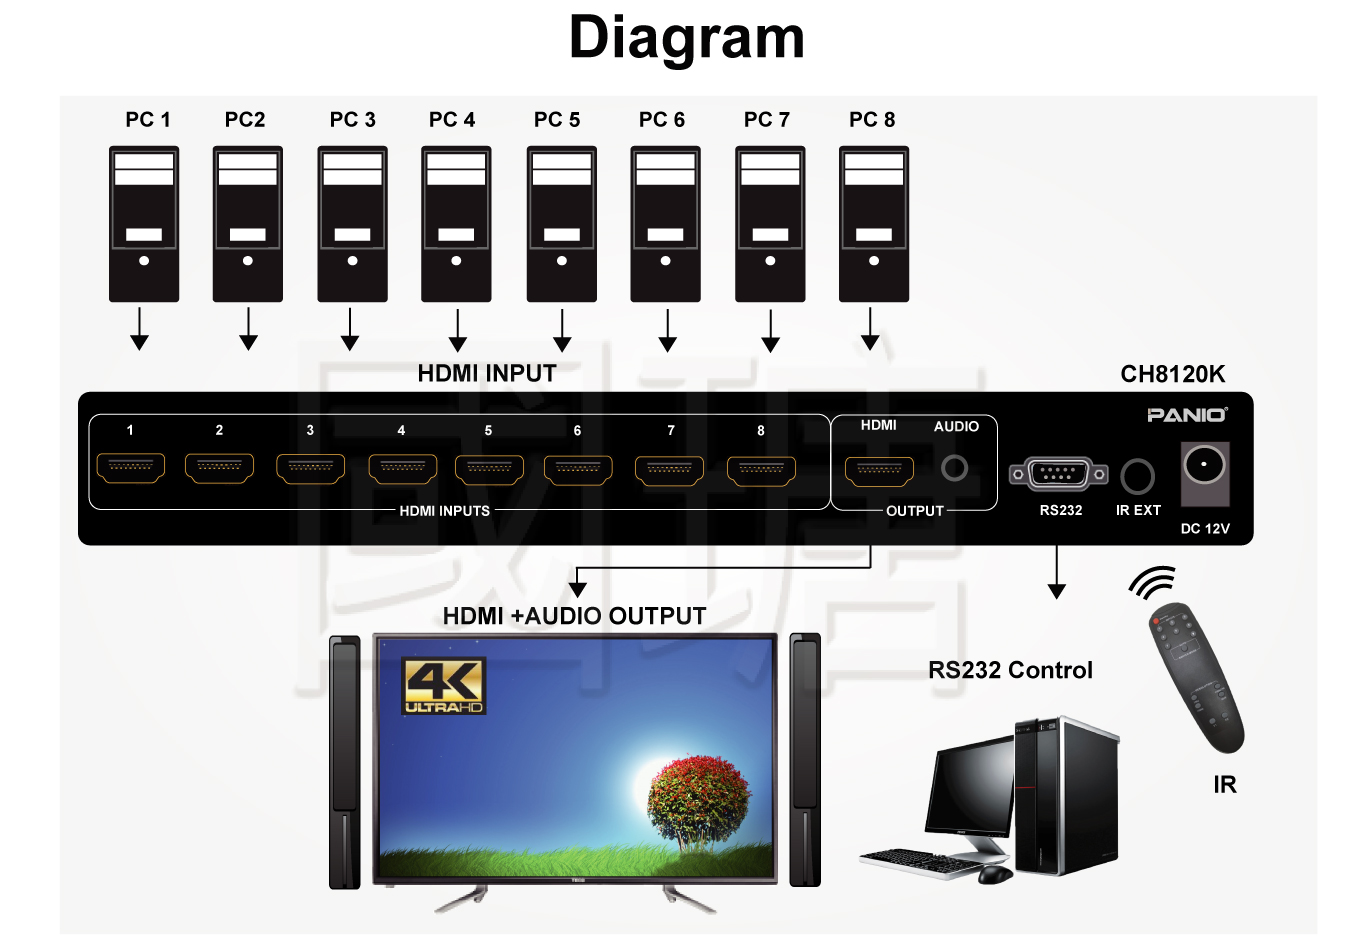 Professional grade 4K 8-channel HDMI video signal switcher